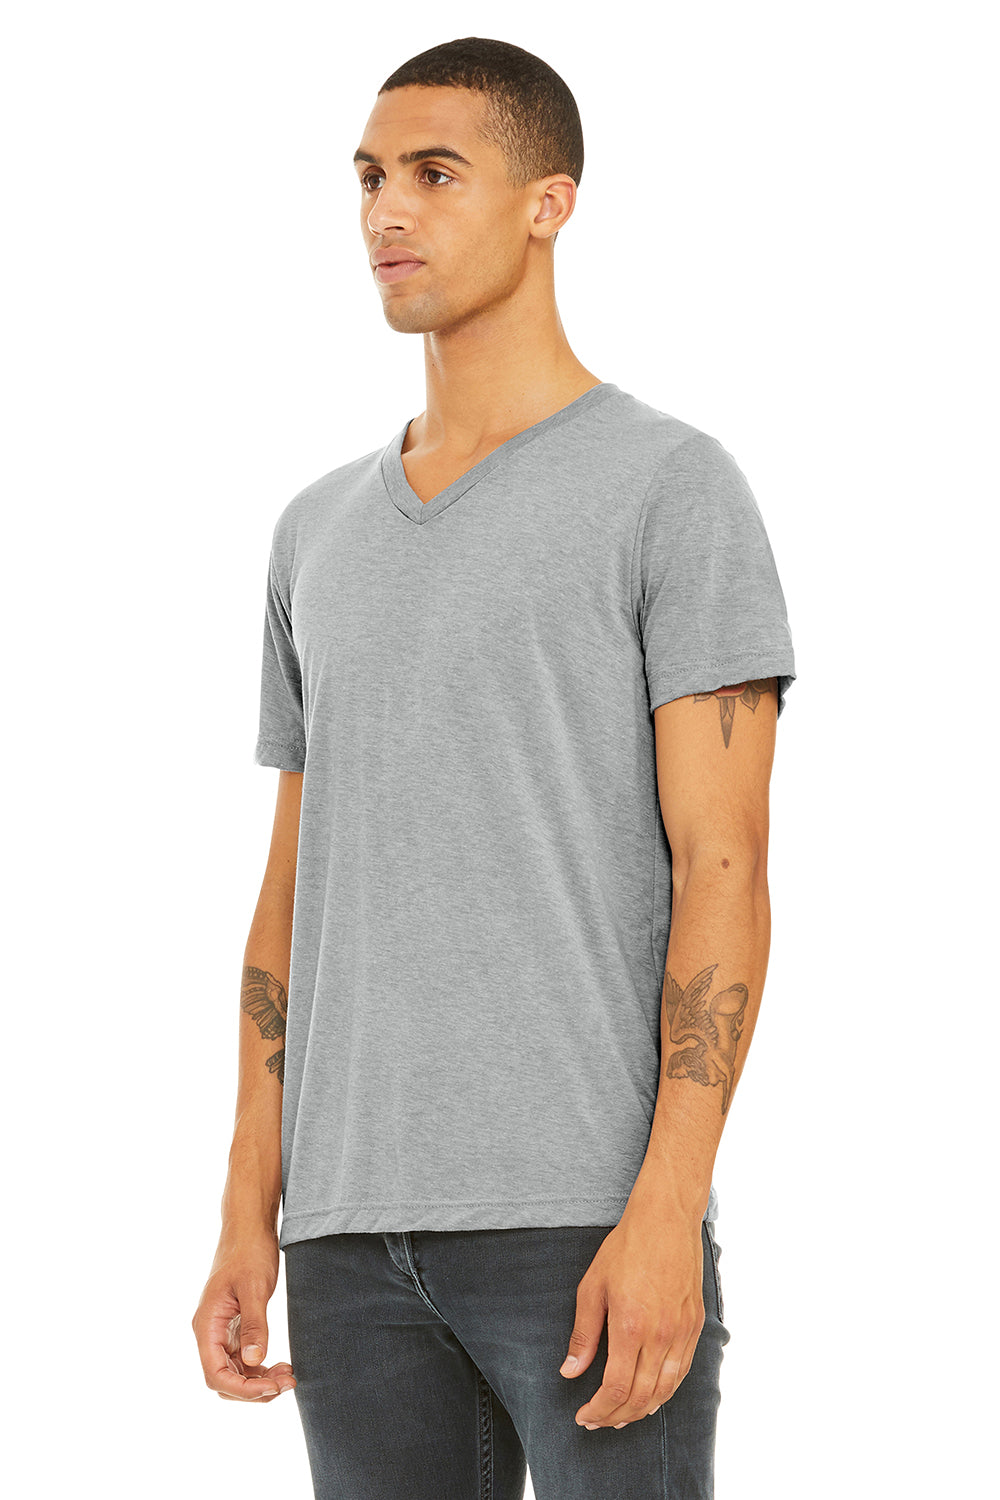 Bella + Canvas BC3415/3415C/3415 Mens Short Sleeve V-Neck T-Shirt Athletic Grey Model 3Q